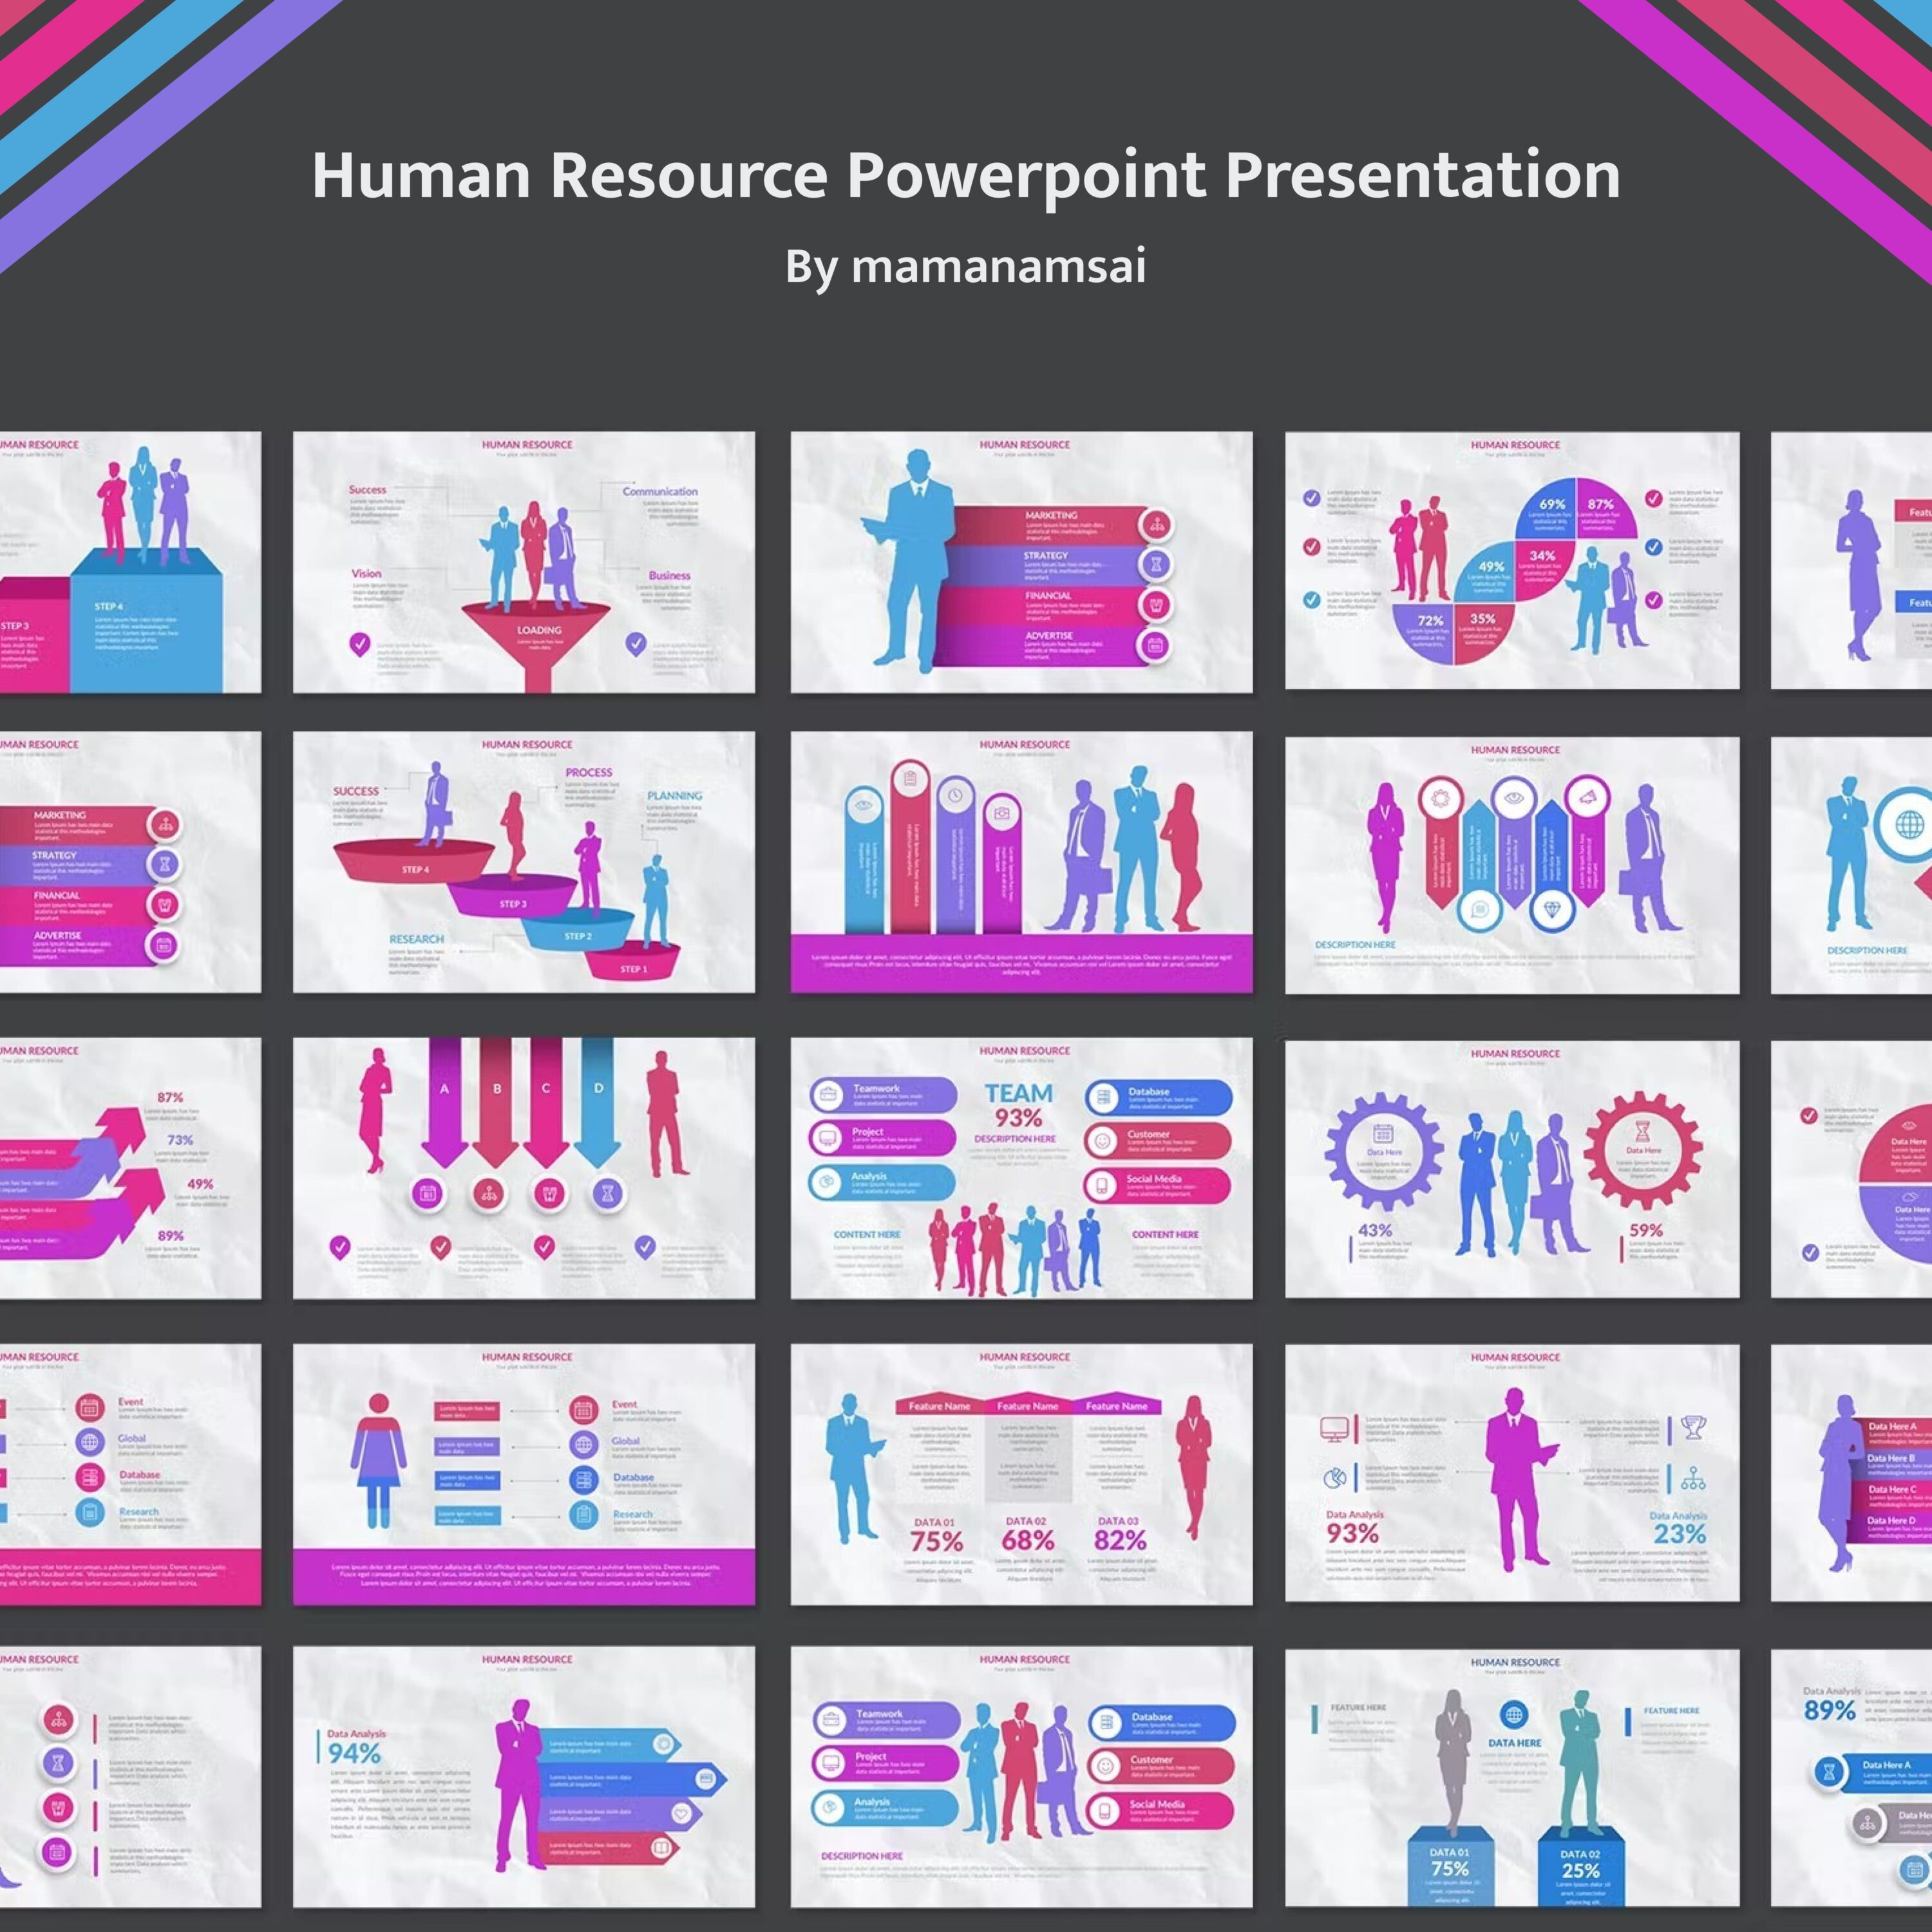 Human Resource Powerpoint Presentation.